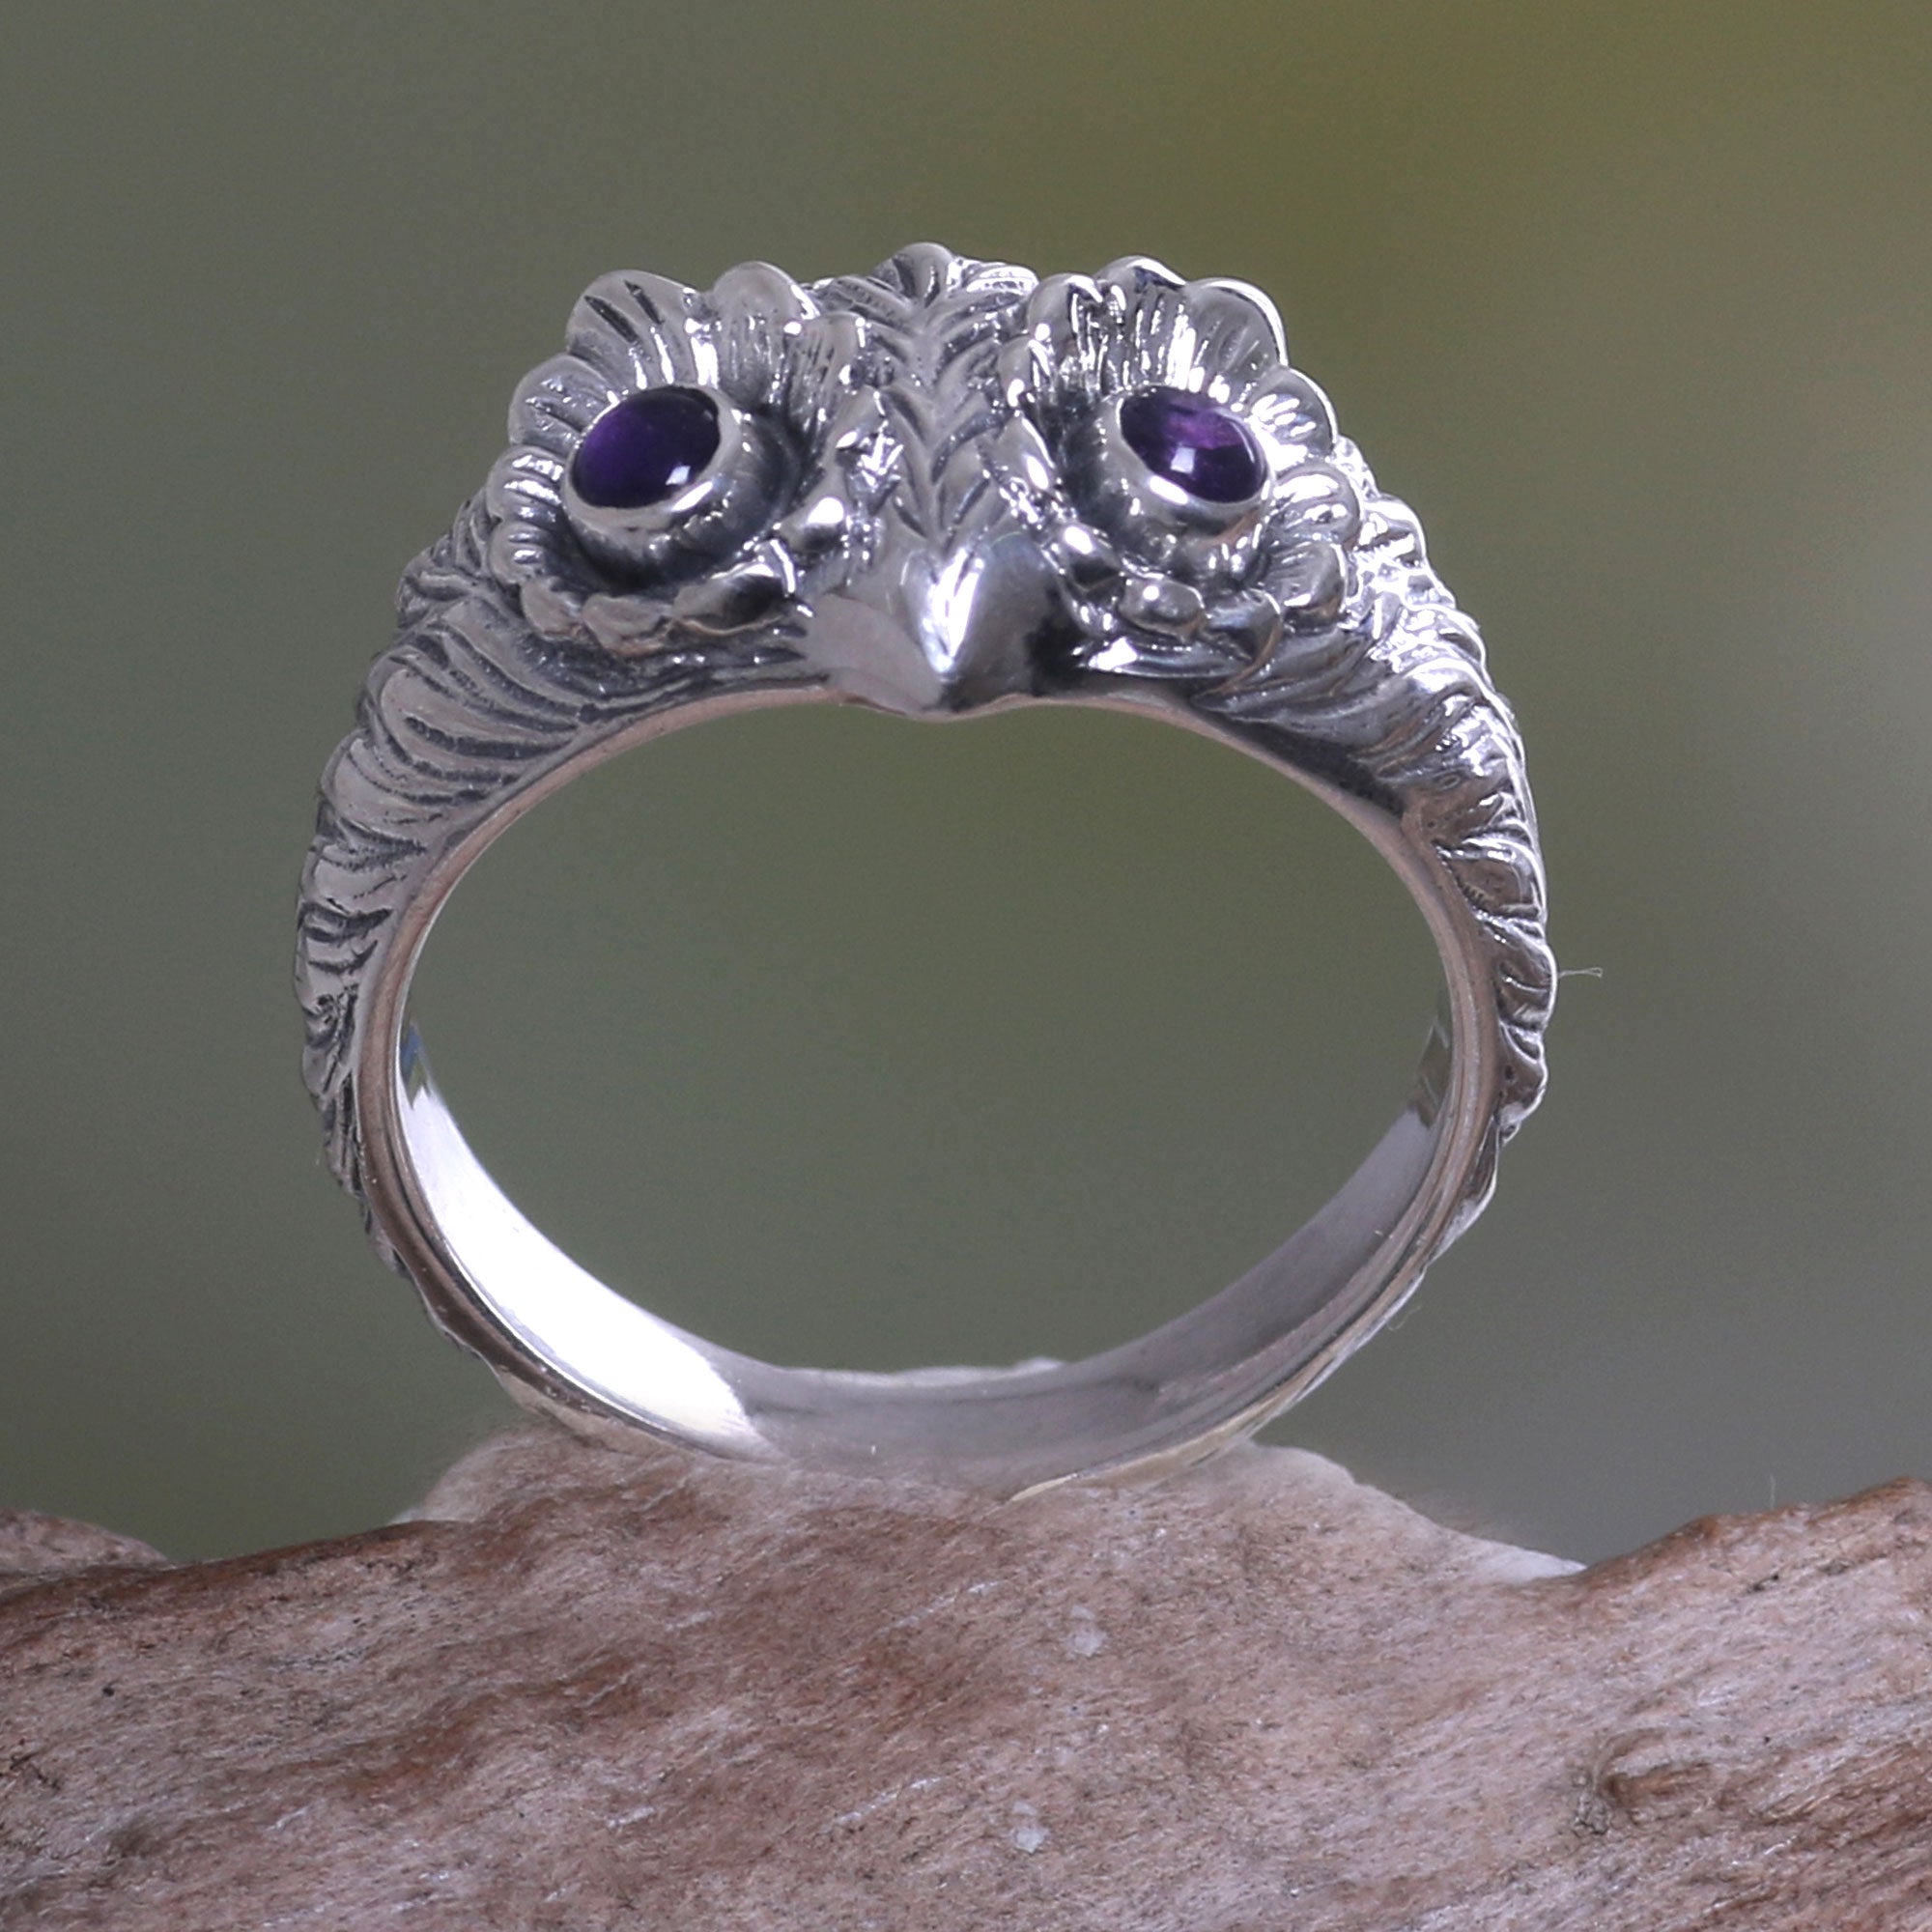 NOVICA Owl Wisdom Amethyst & Silver Band Ring - Size 12